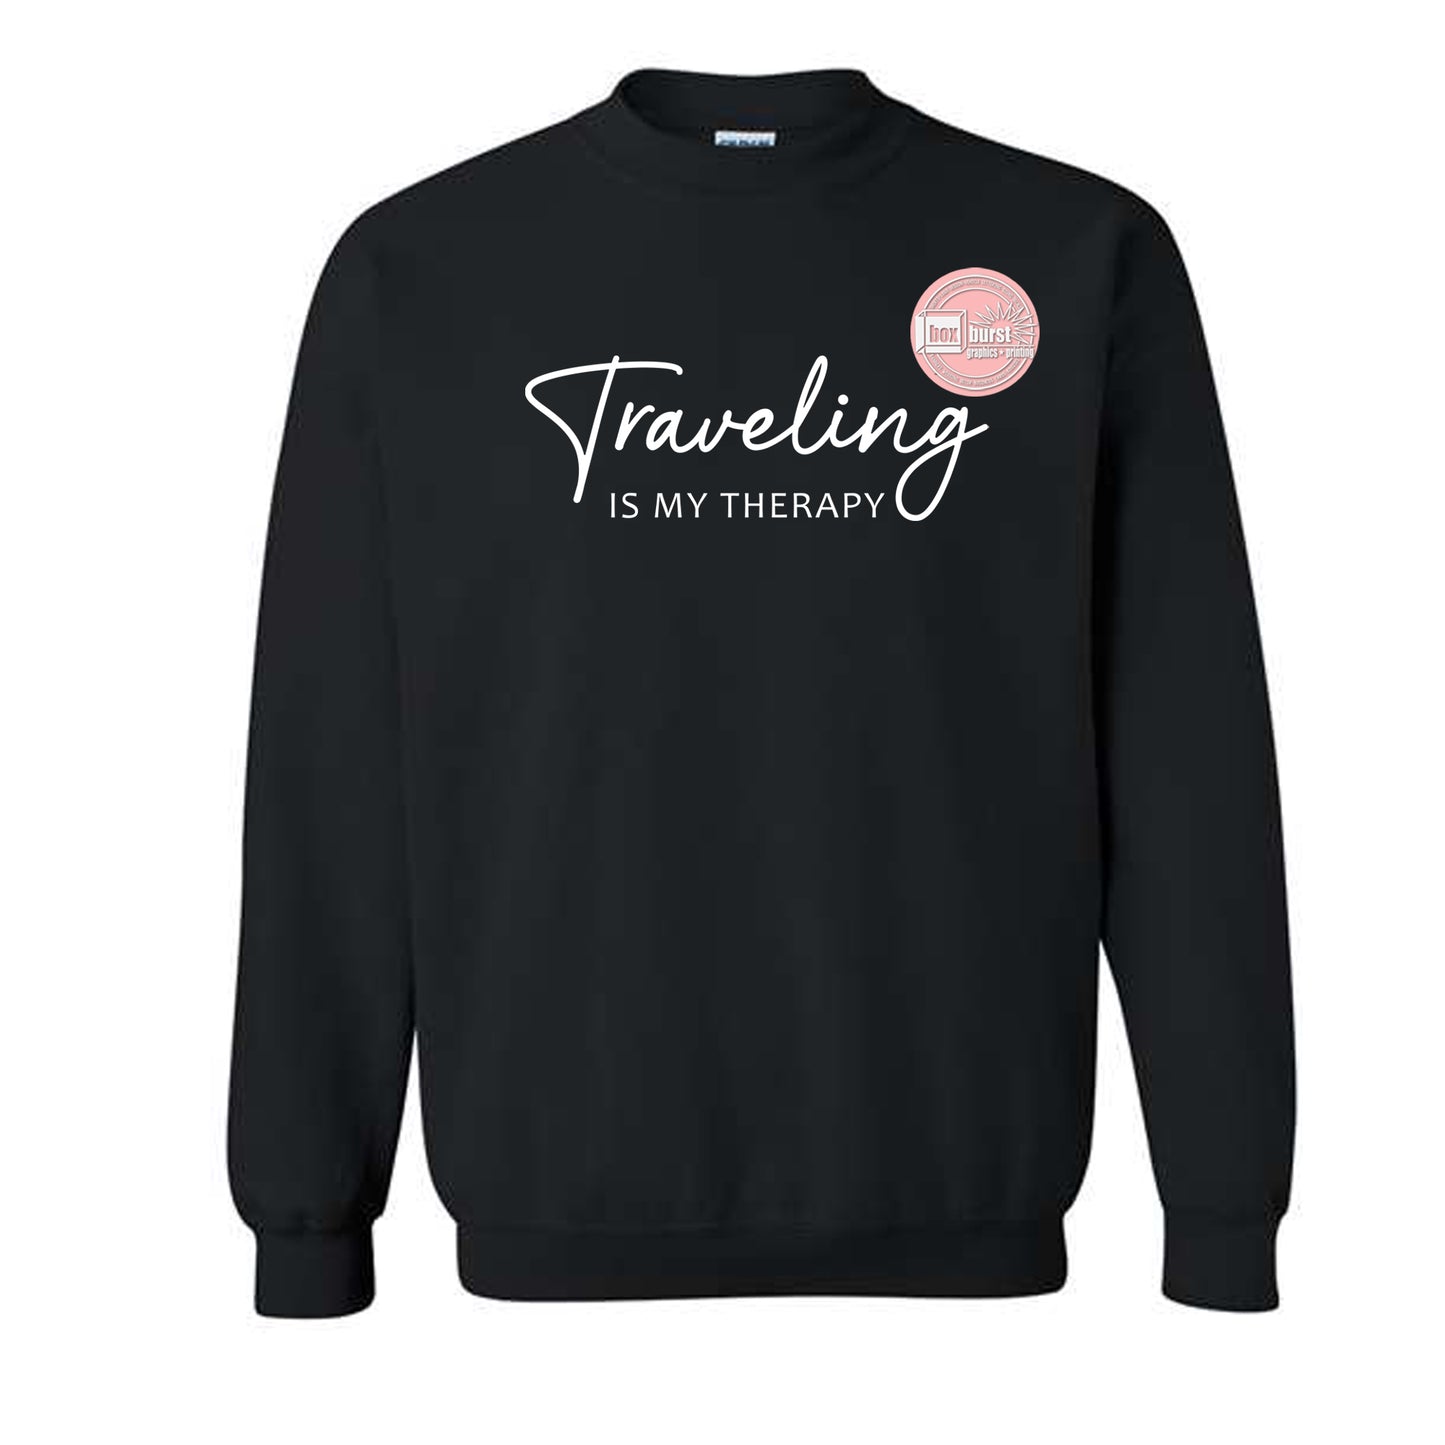 Travel Therapy sweatshirt